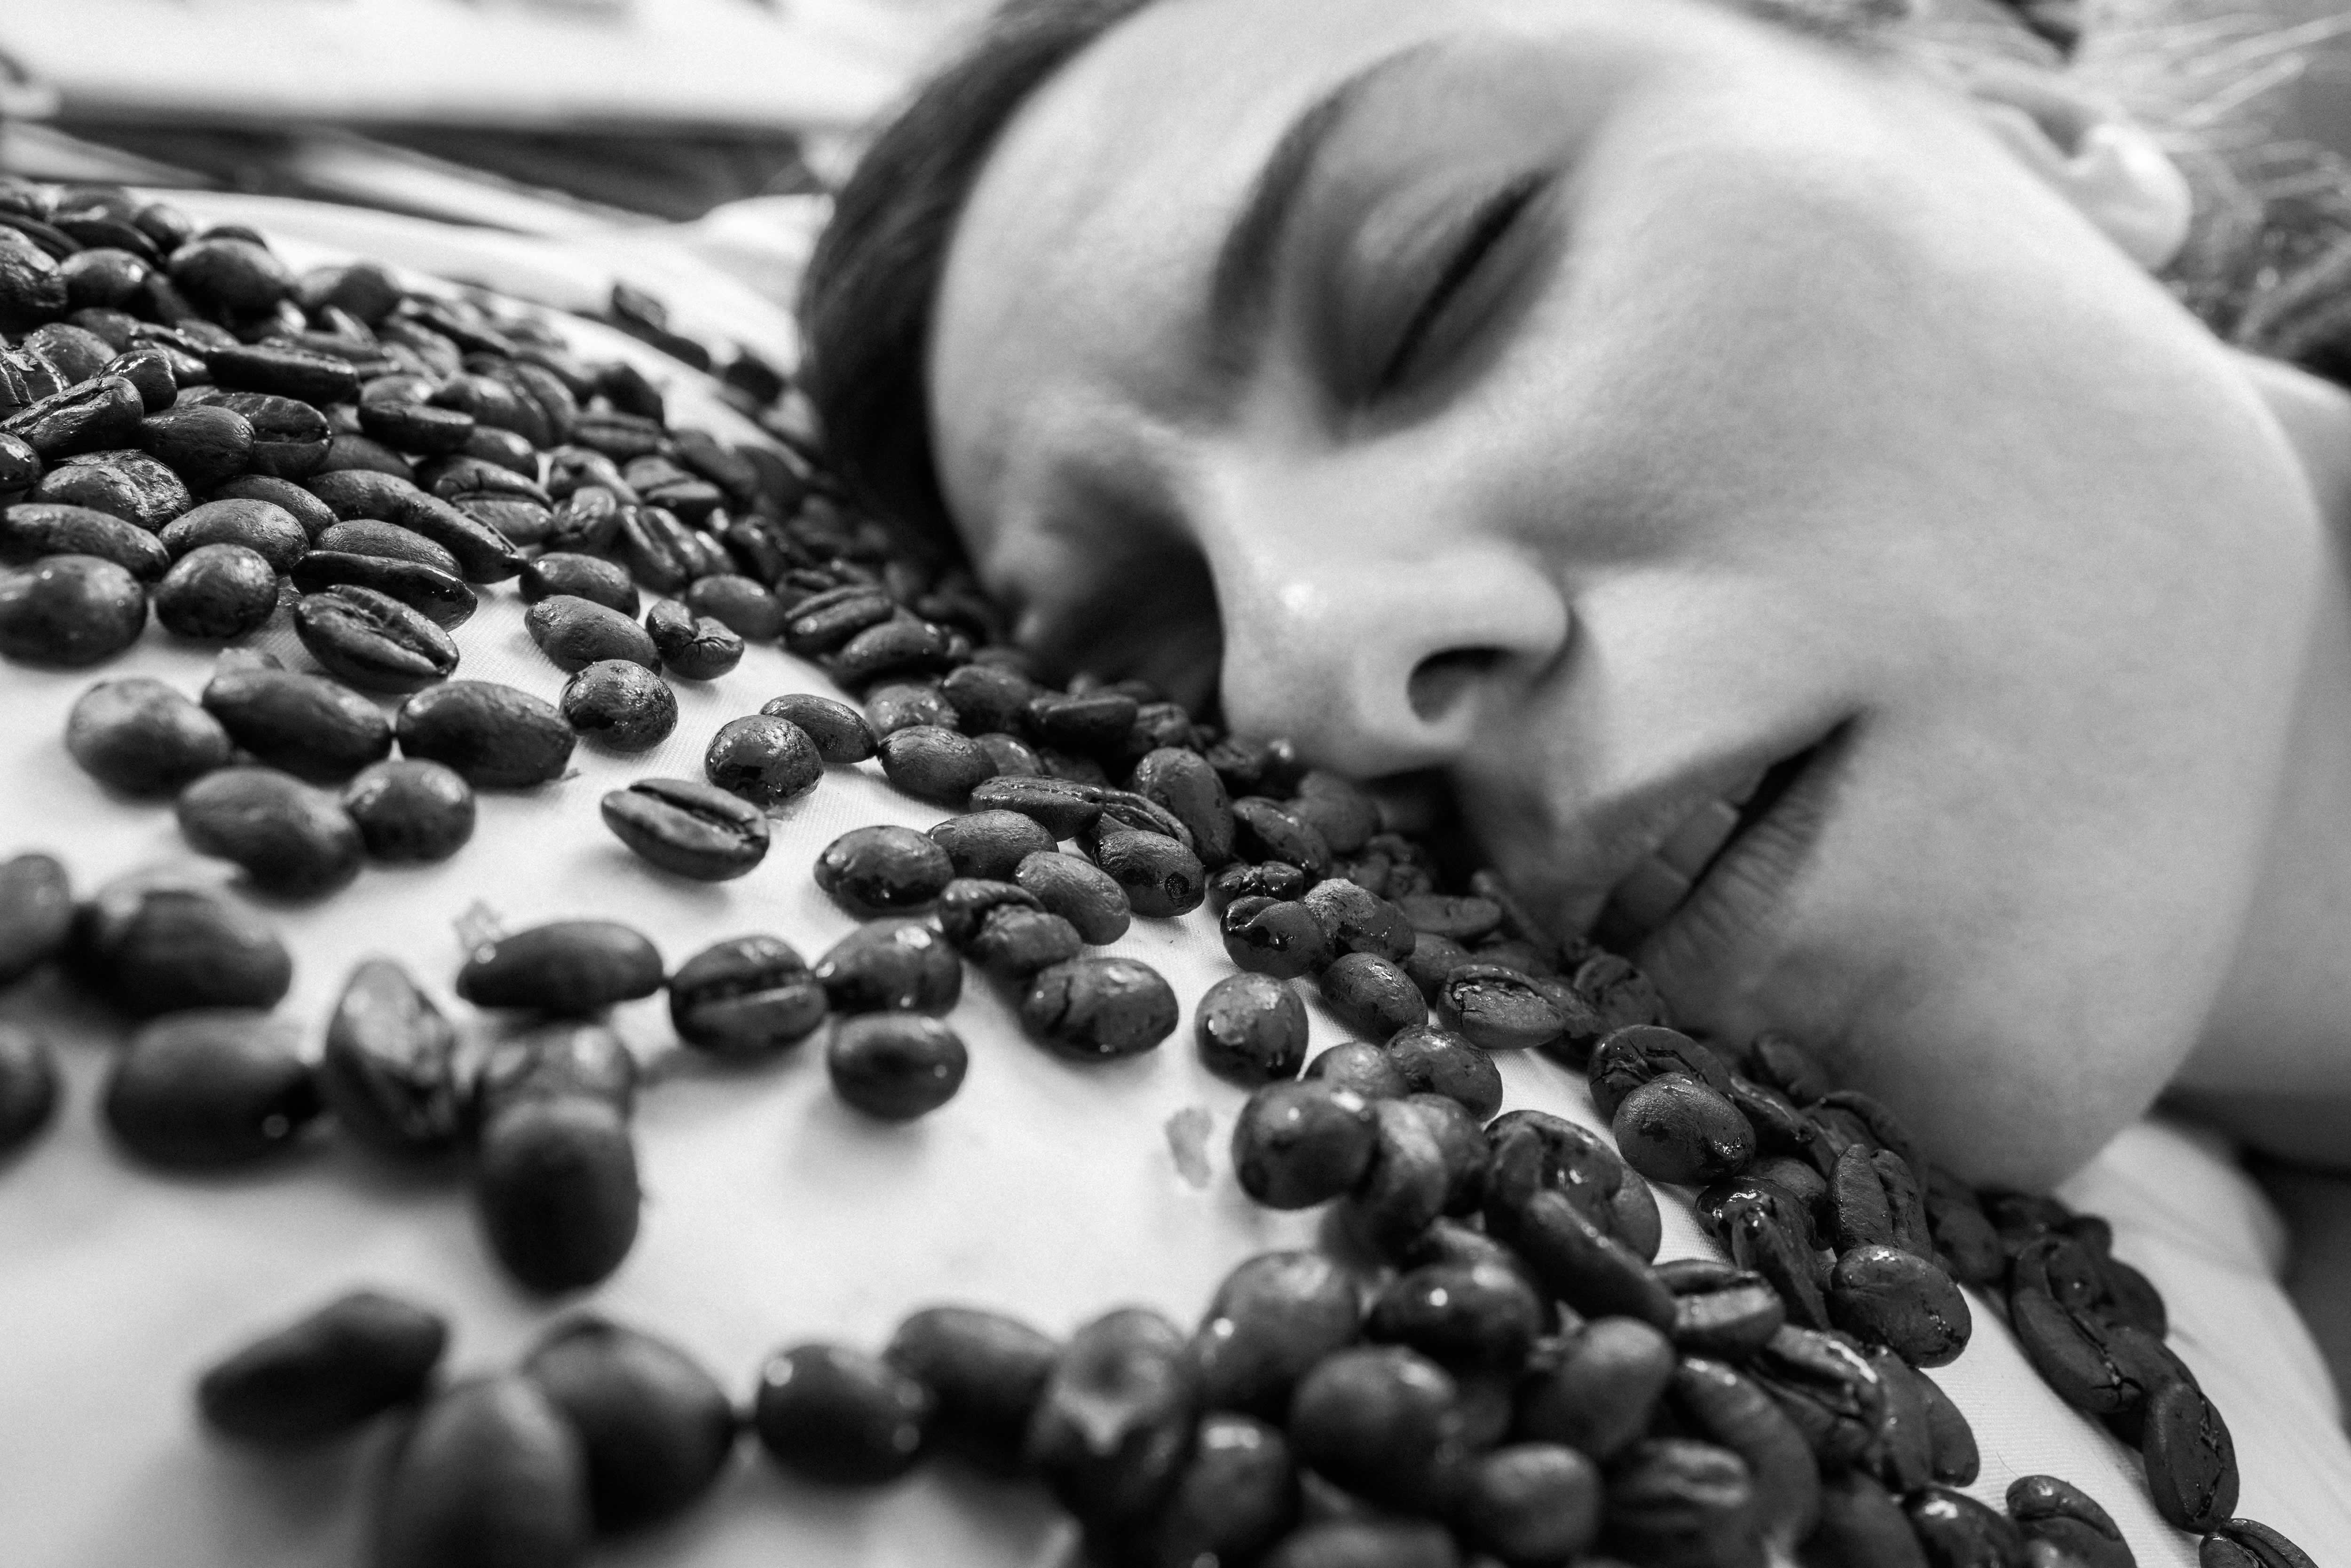 gratisography-sleeping-coffee-beans-5000-free-stock-photo.jpg